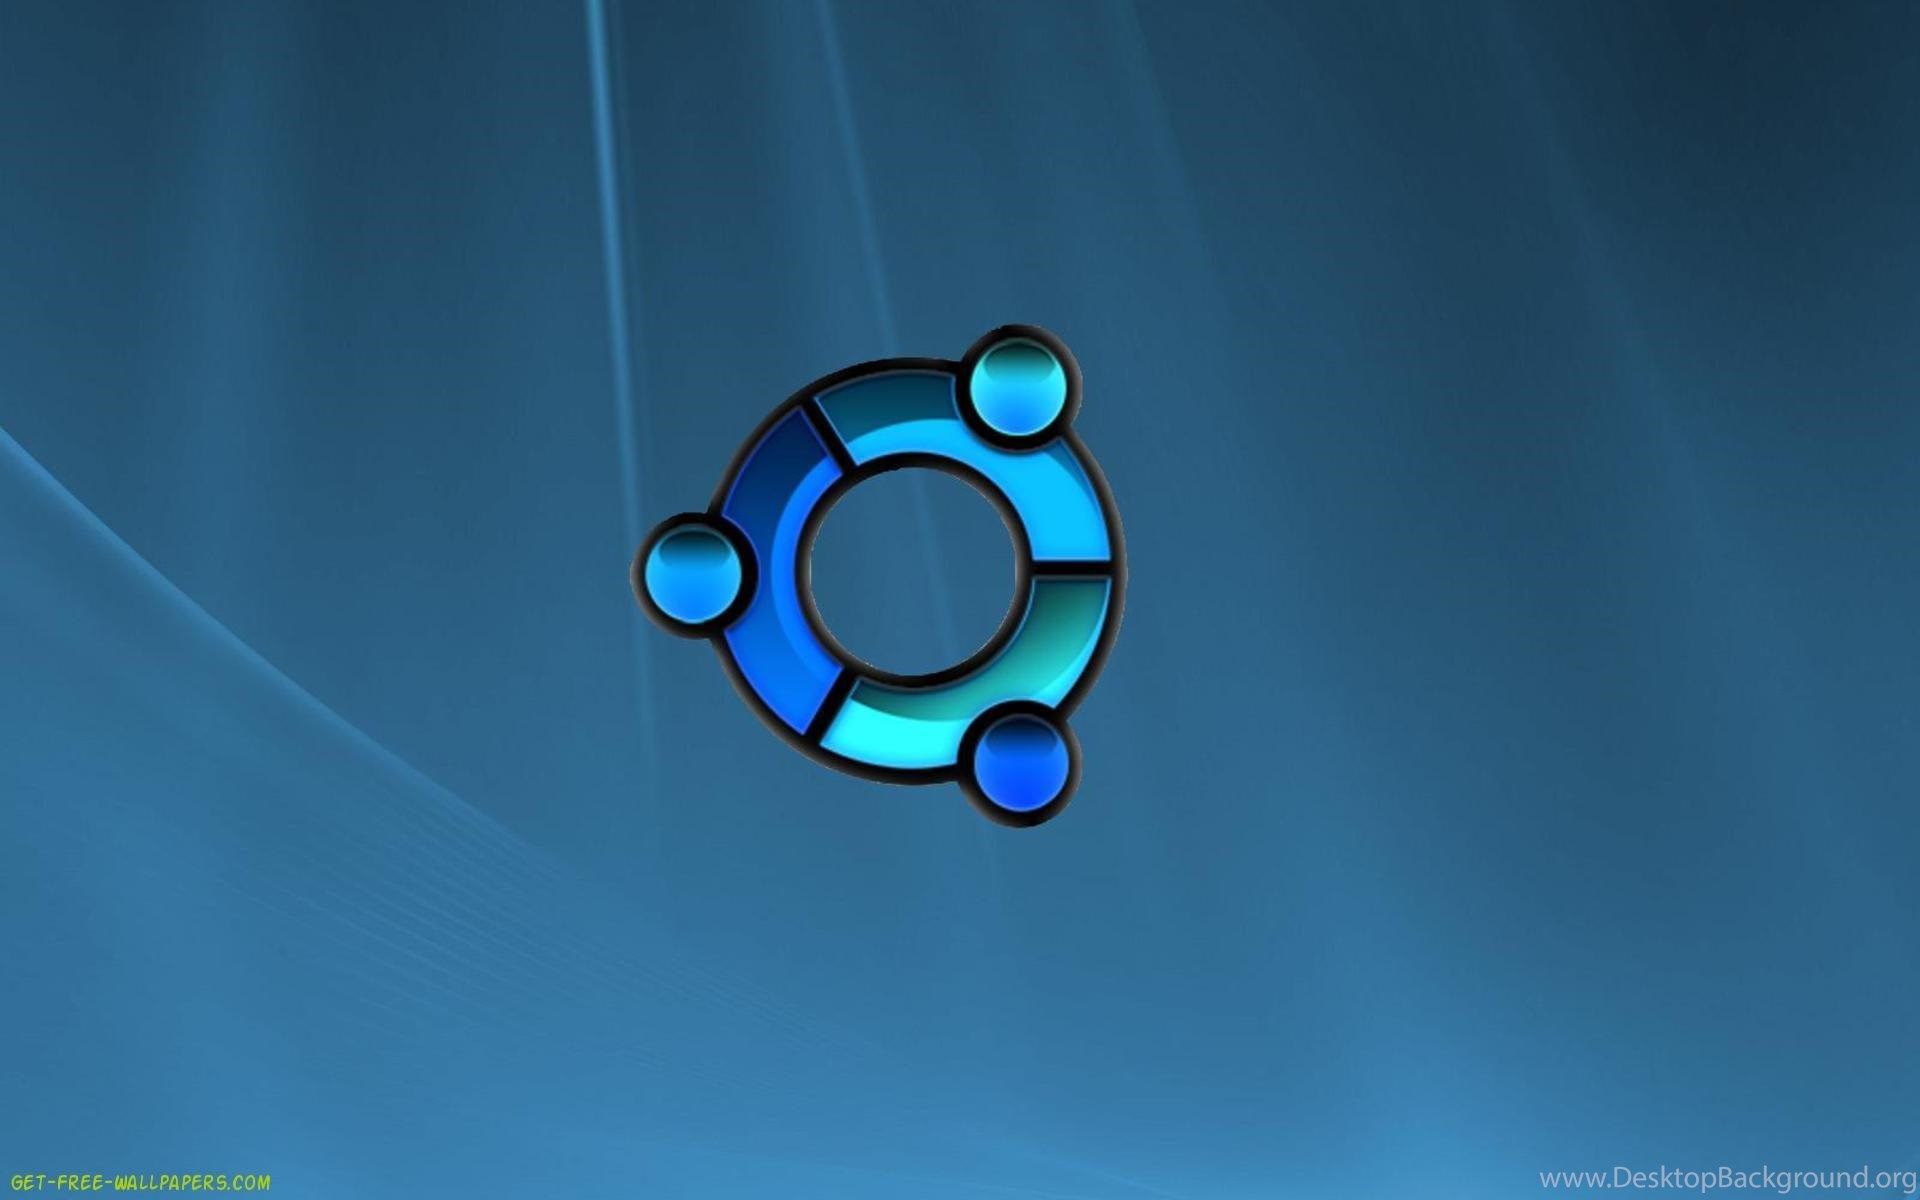 Ubuntu Vista Blue Technology Wallpaper .desktopbackground.org